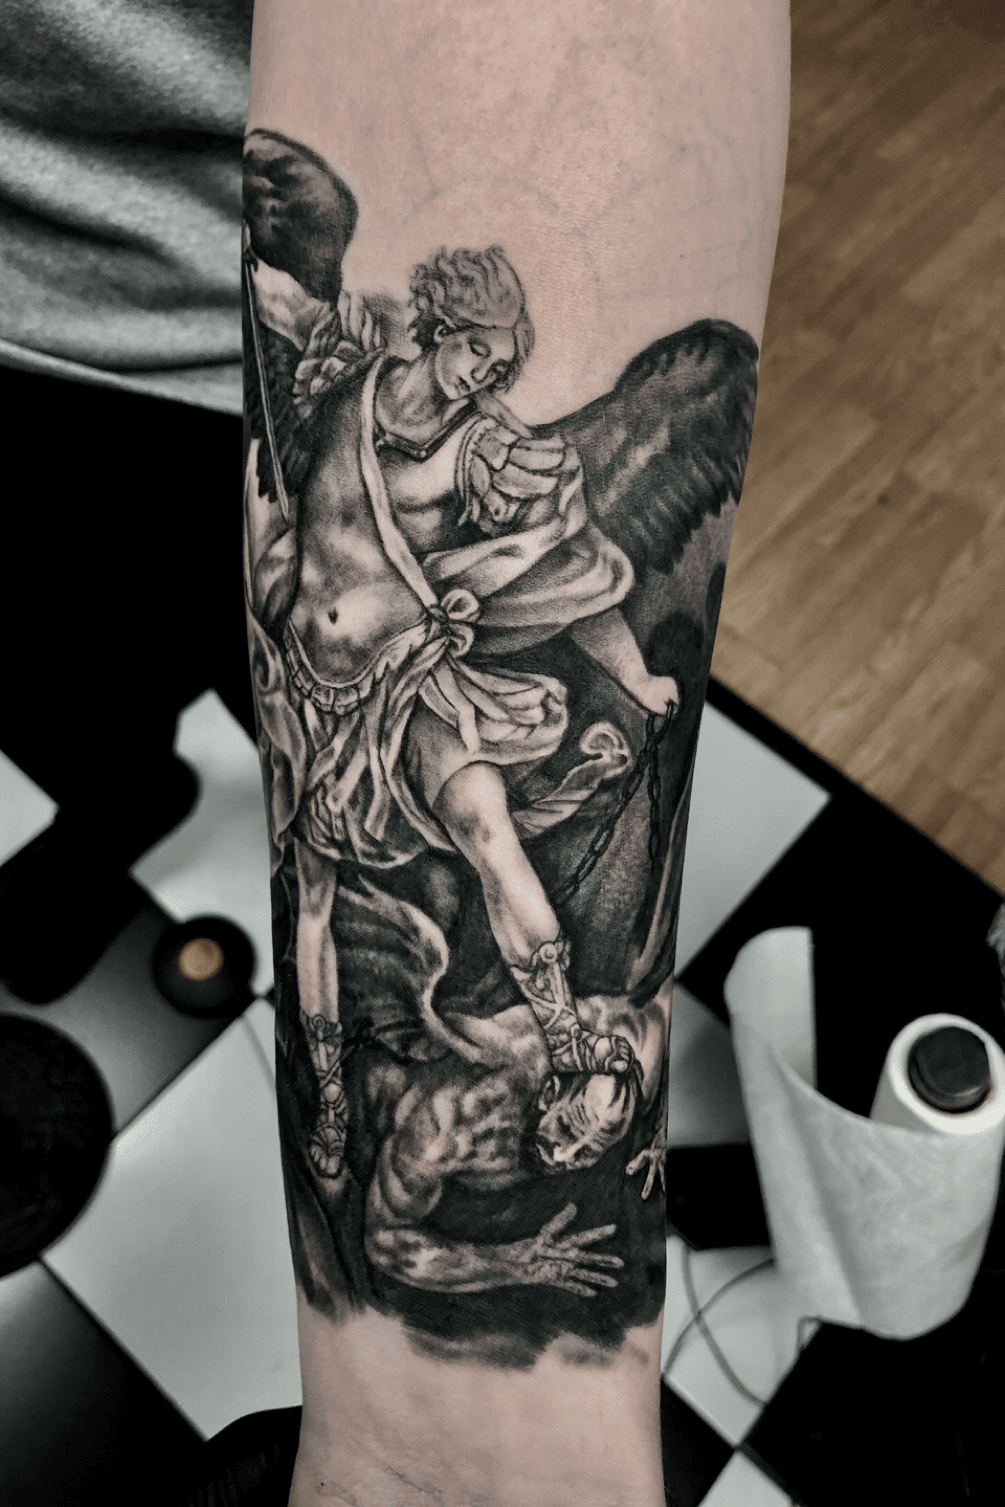 Azarja van der Veen on Twitter St Florian tattoo tattoos stflorian  firefighter fireman blackandgrey tattooer tattooist tattoowork ink  axe httptcohzT32NnqEx  Twitter